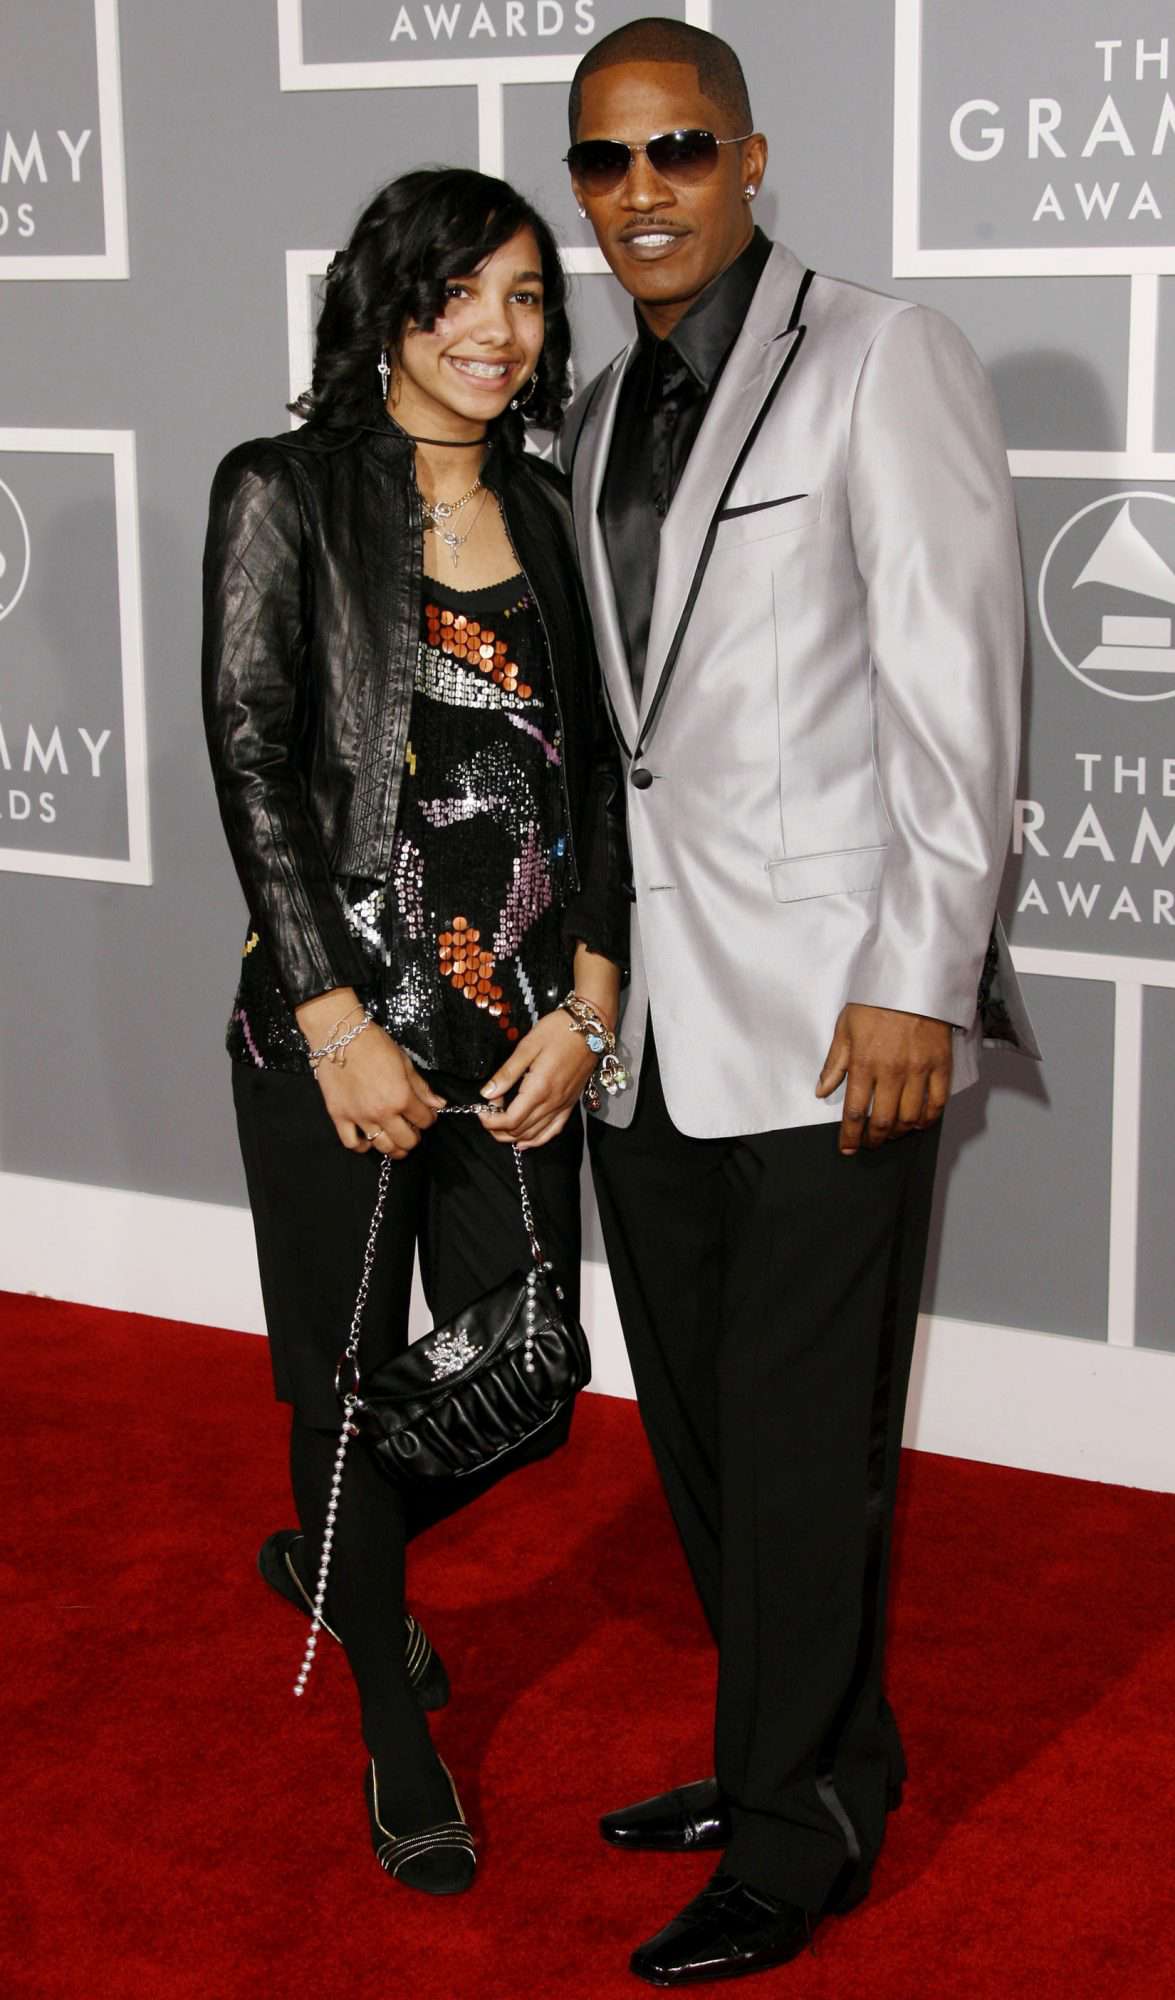 The 2007 Grammy Awards